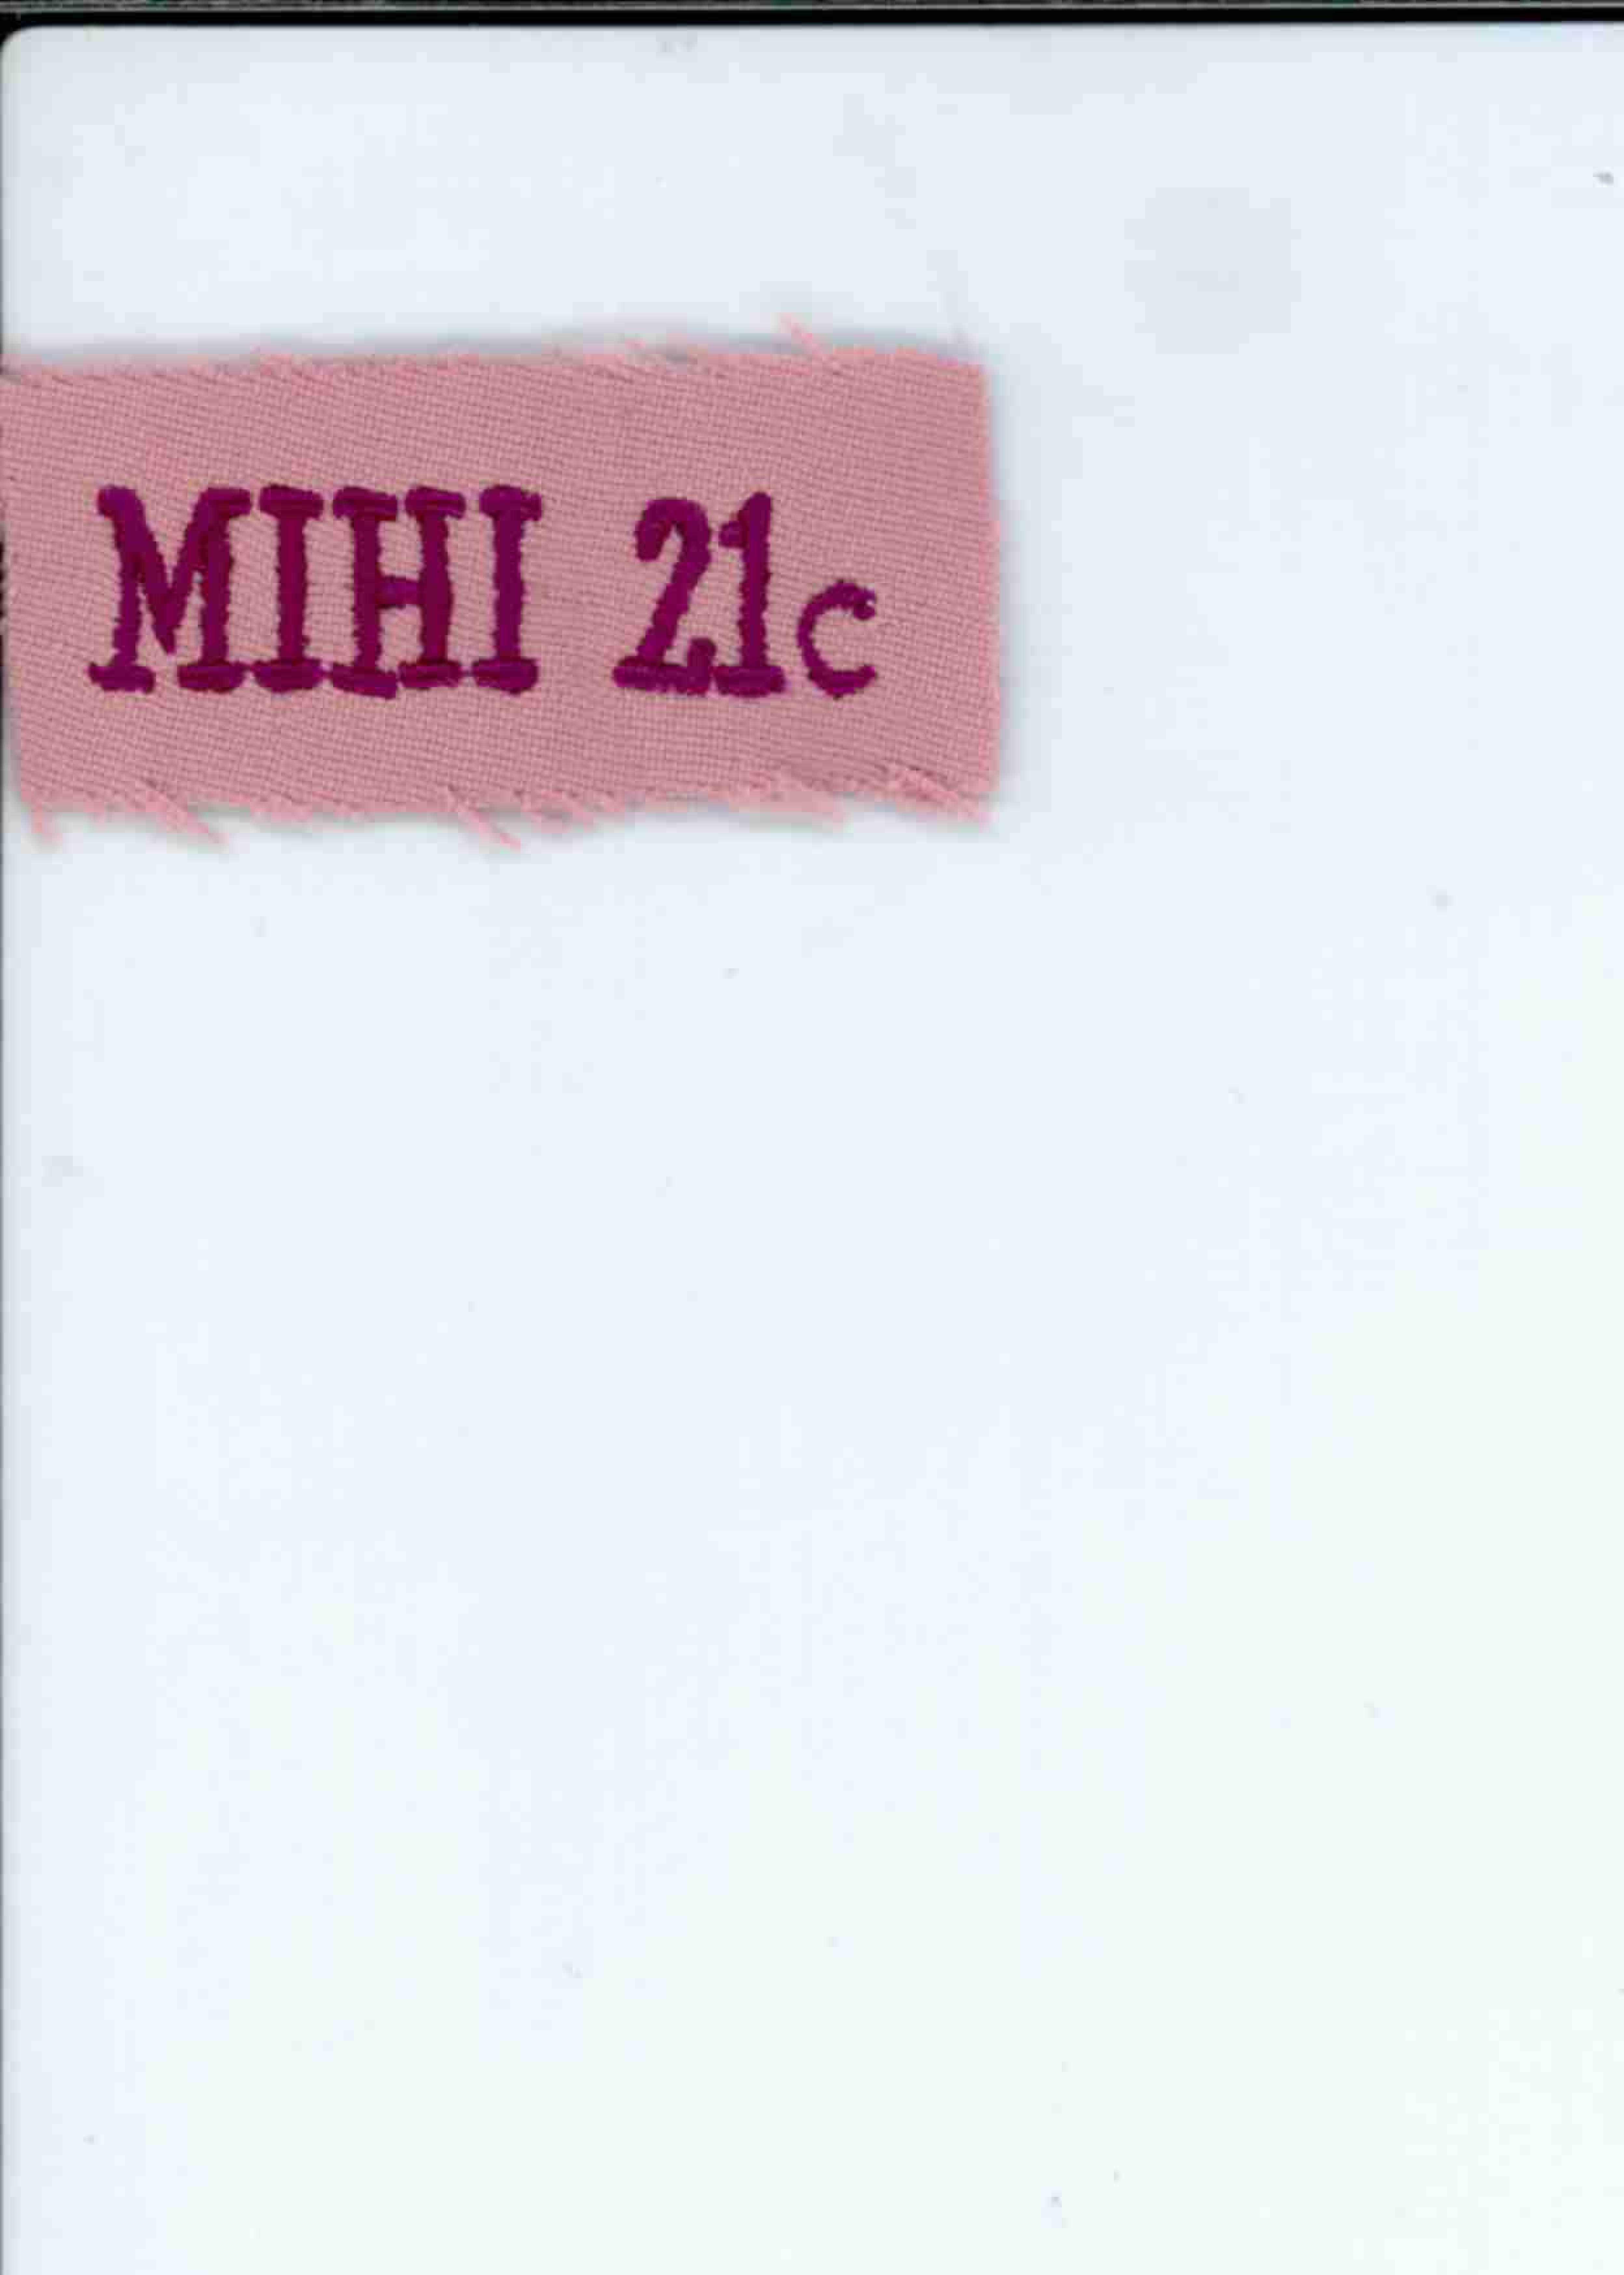  MIHI 21C